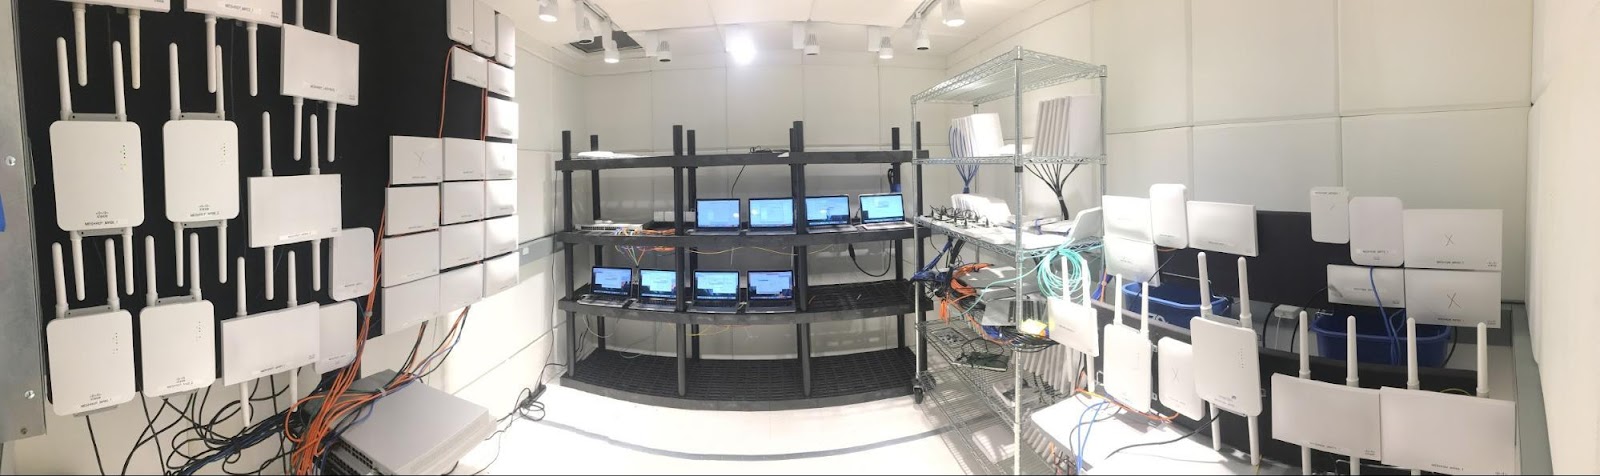 Image of the Meraki AP and MG test lab.